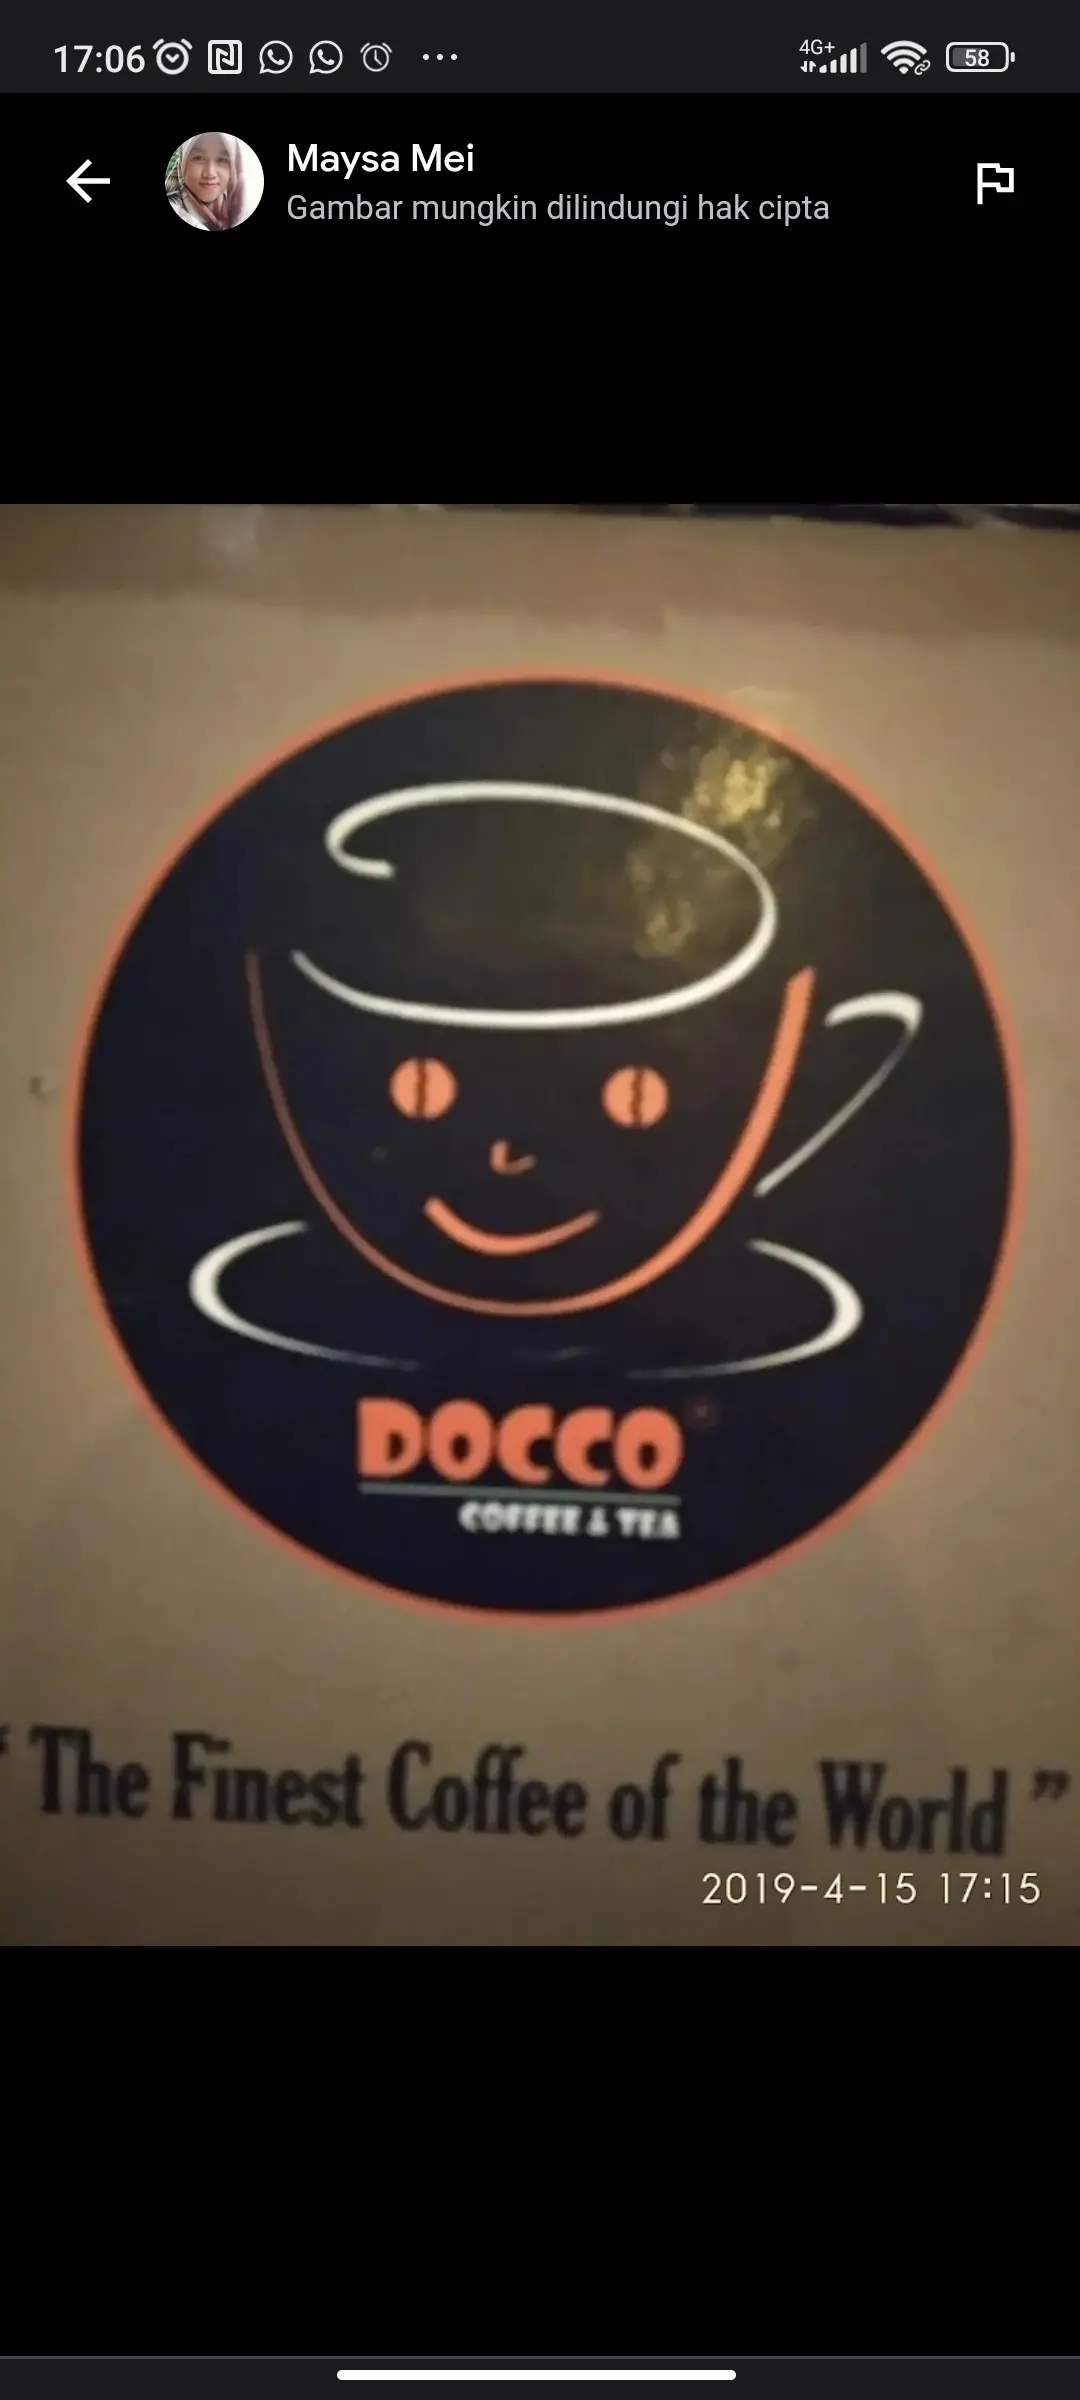 Docco Coffee & Tea